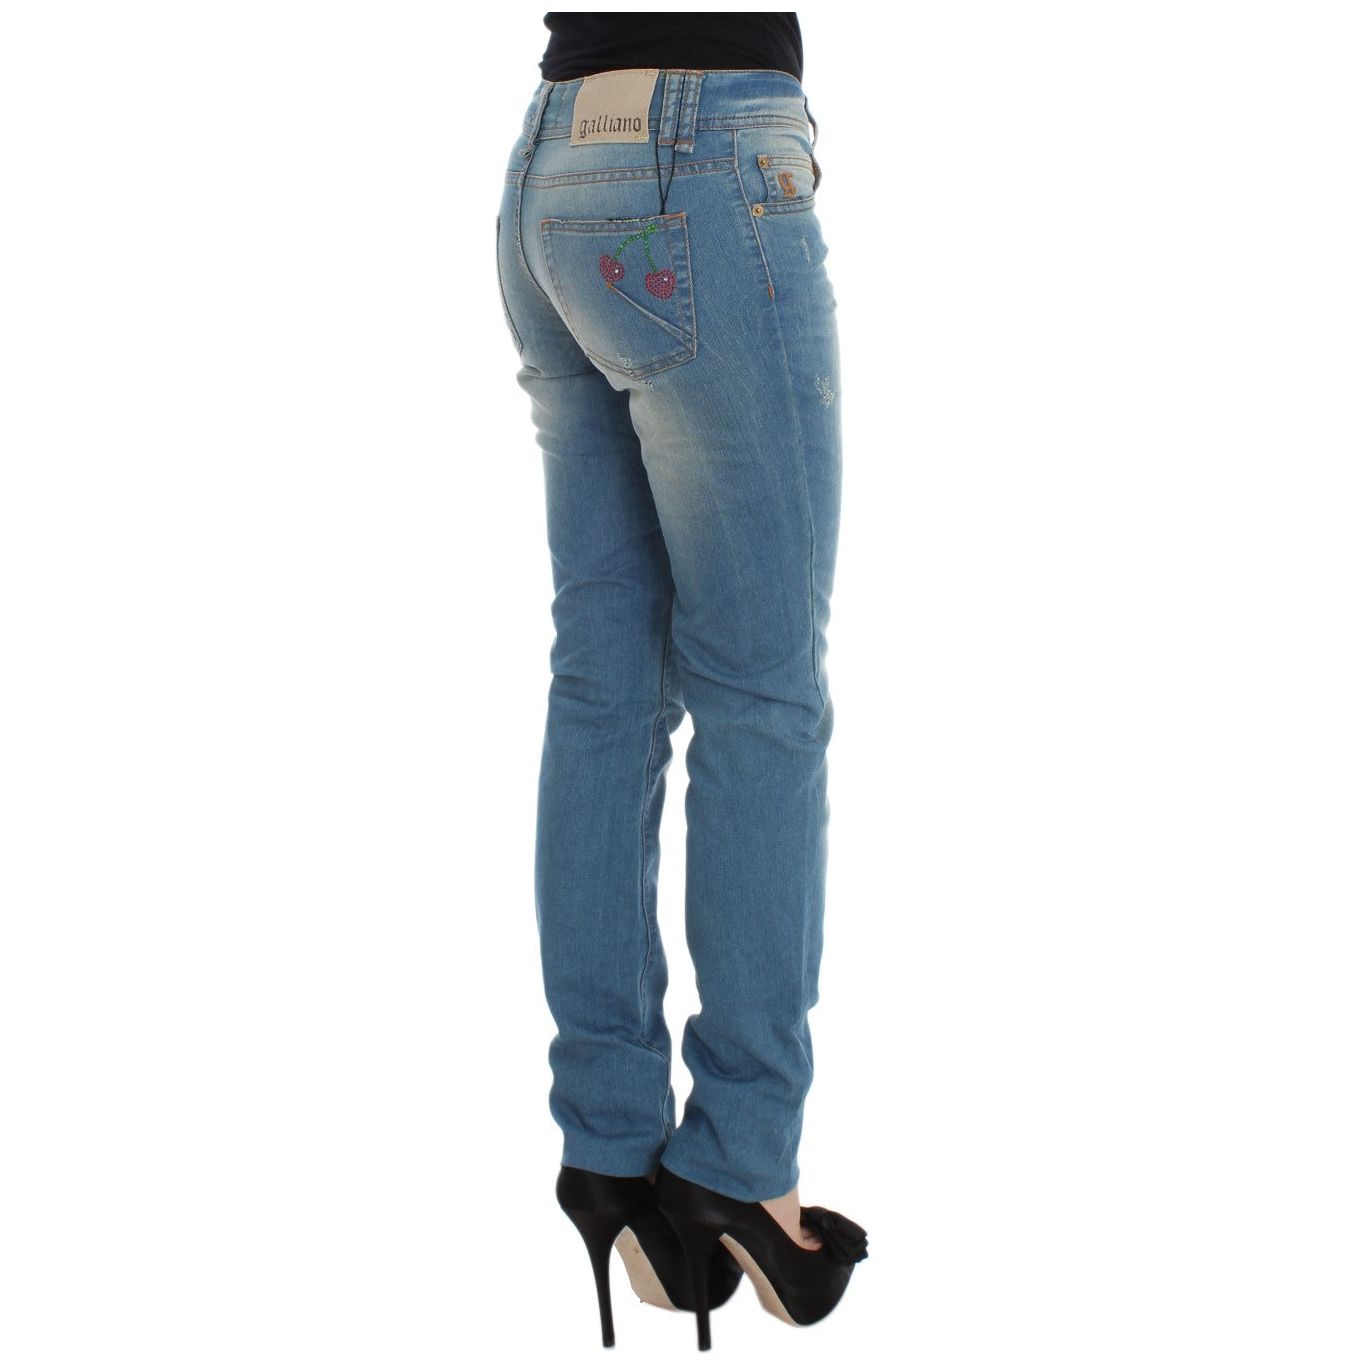 John Galliano Sleek Blue Slim Fit Designer Jeans blue-wash-cotton-blend-slim-fit-jeans-1 329905-blue-wash-cotton-blend-slim-fit-jeans-4-3.jpg